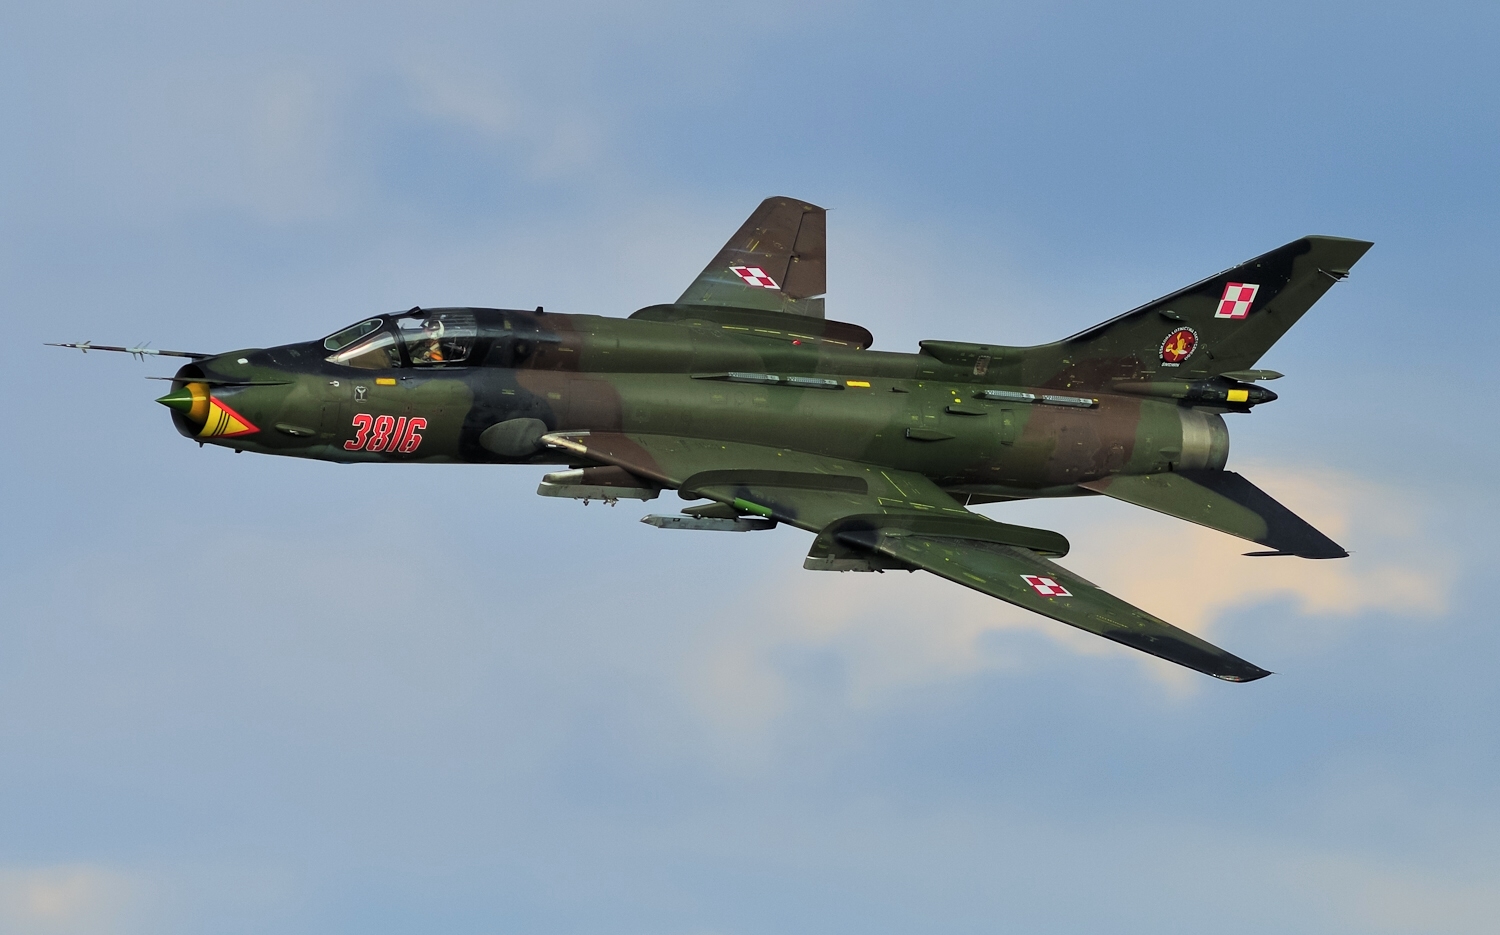 General 1500x935 aircraft military aircraft sky Sukhoi Su-22 Polish Air Force jet fighter Russian/Soviet aircraft